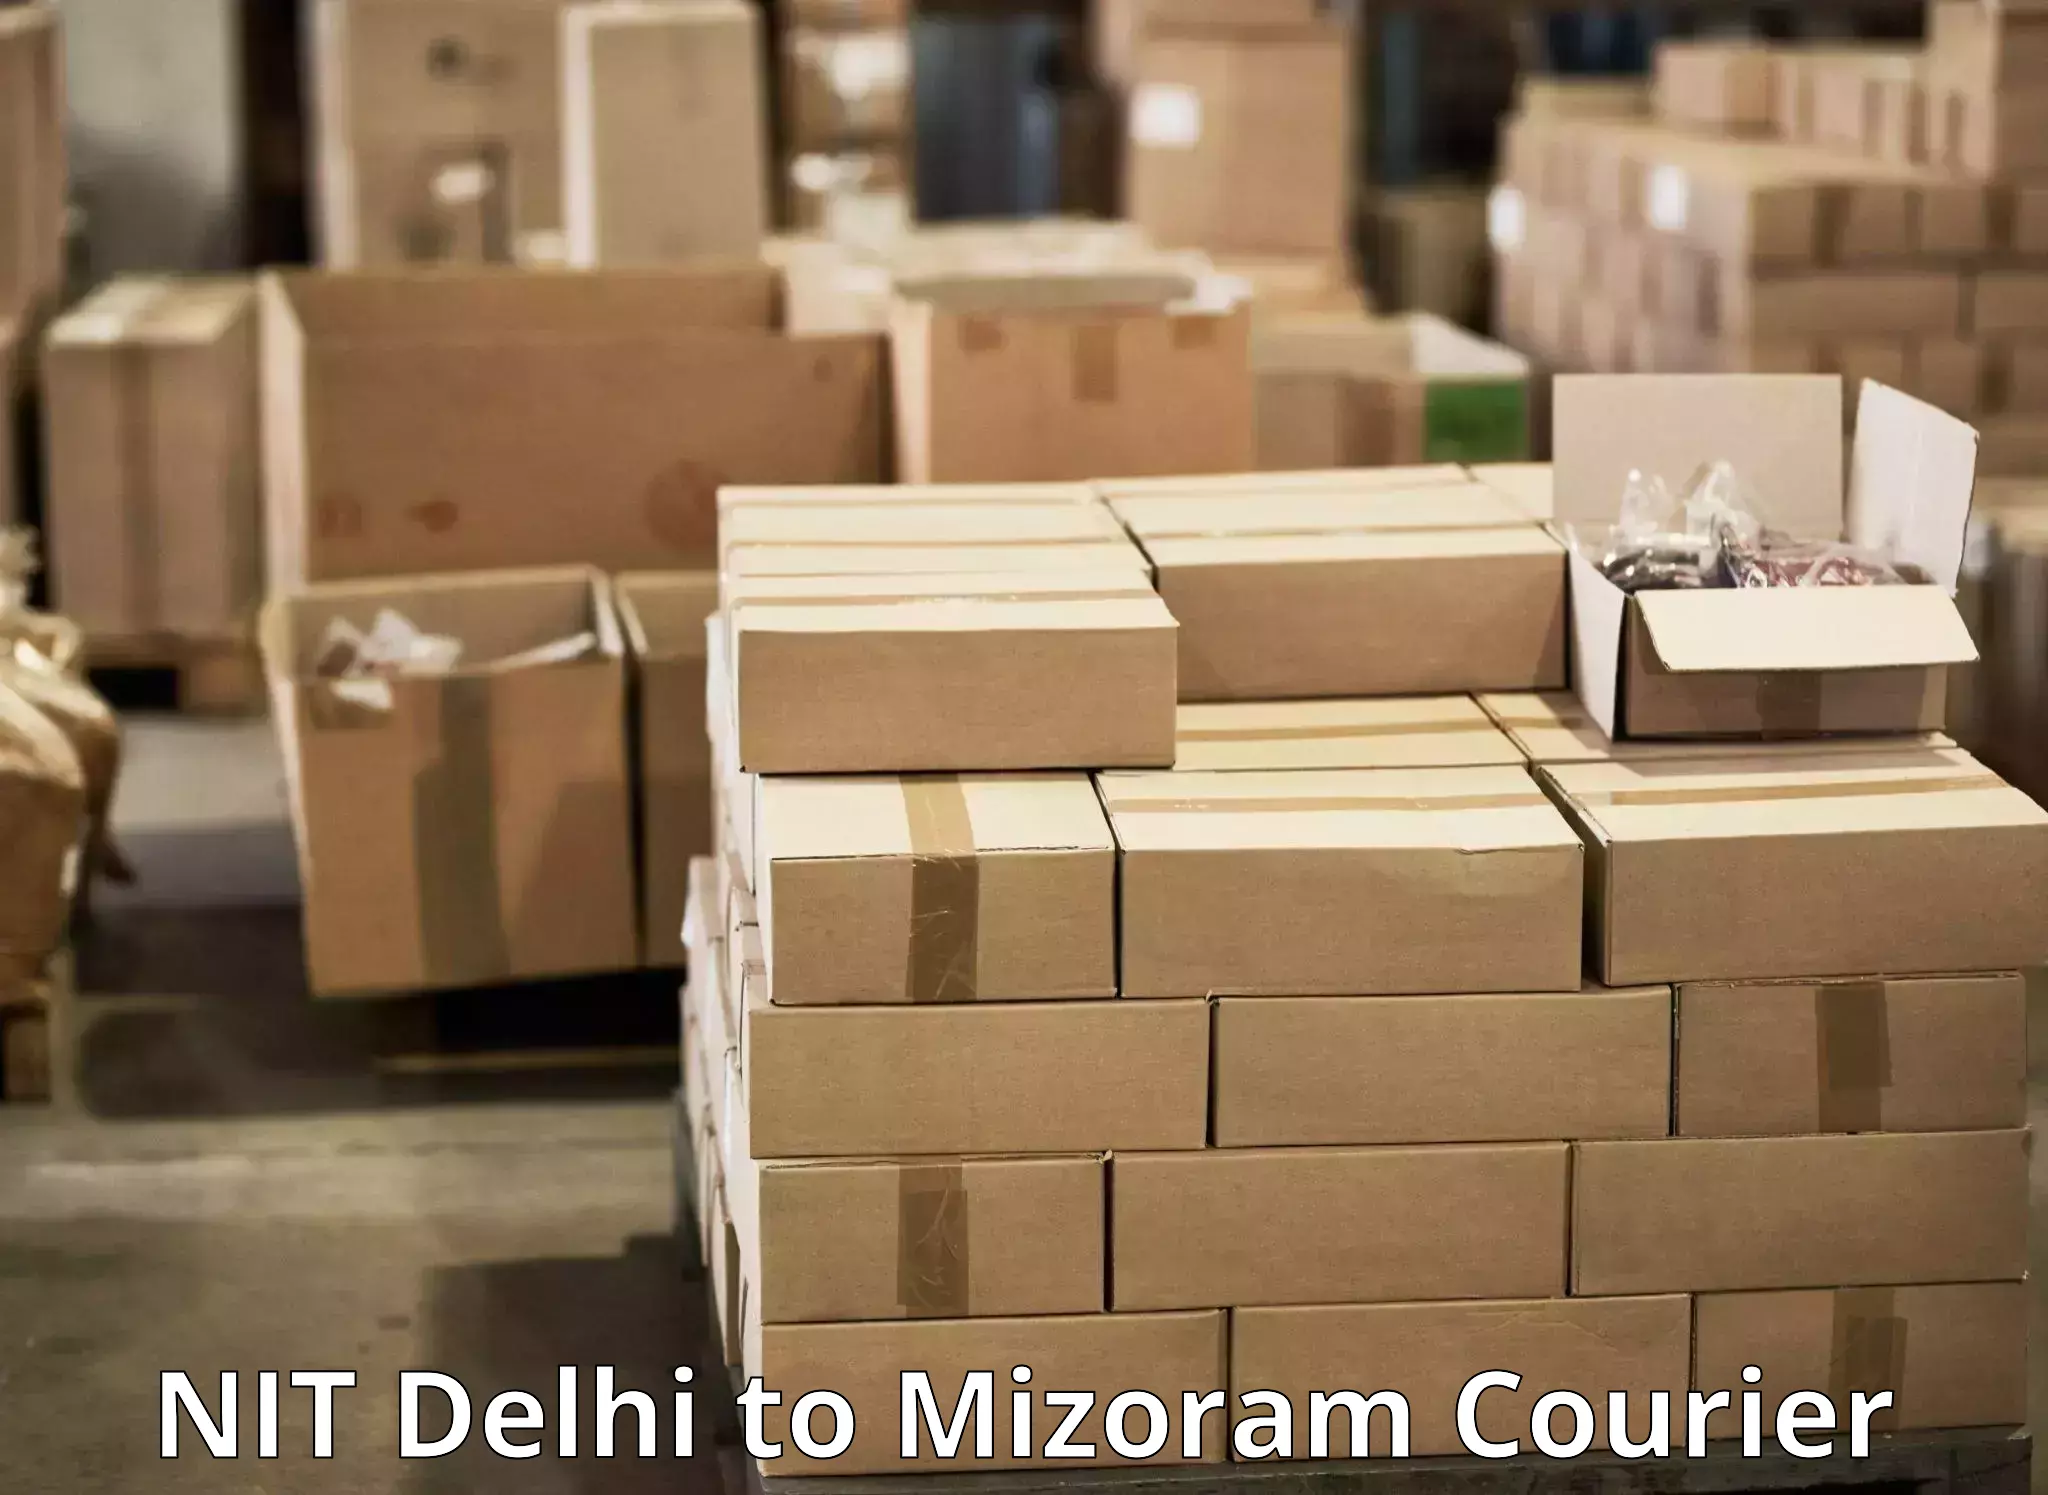 Courier service partnerships NIT Delhi to Mizoram